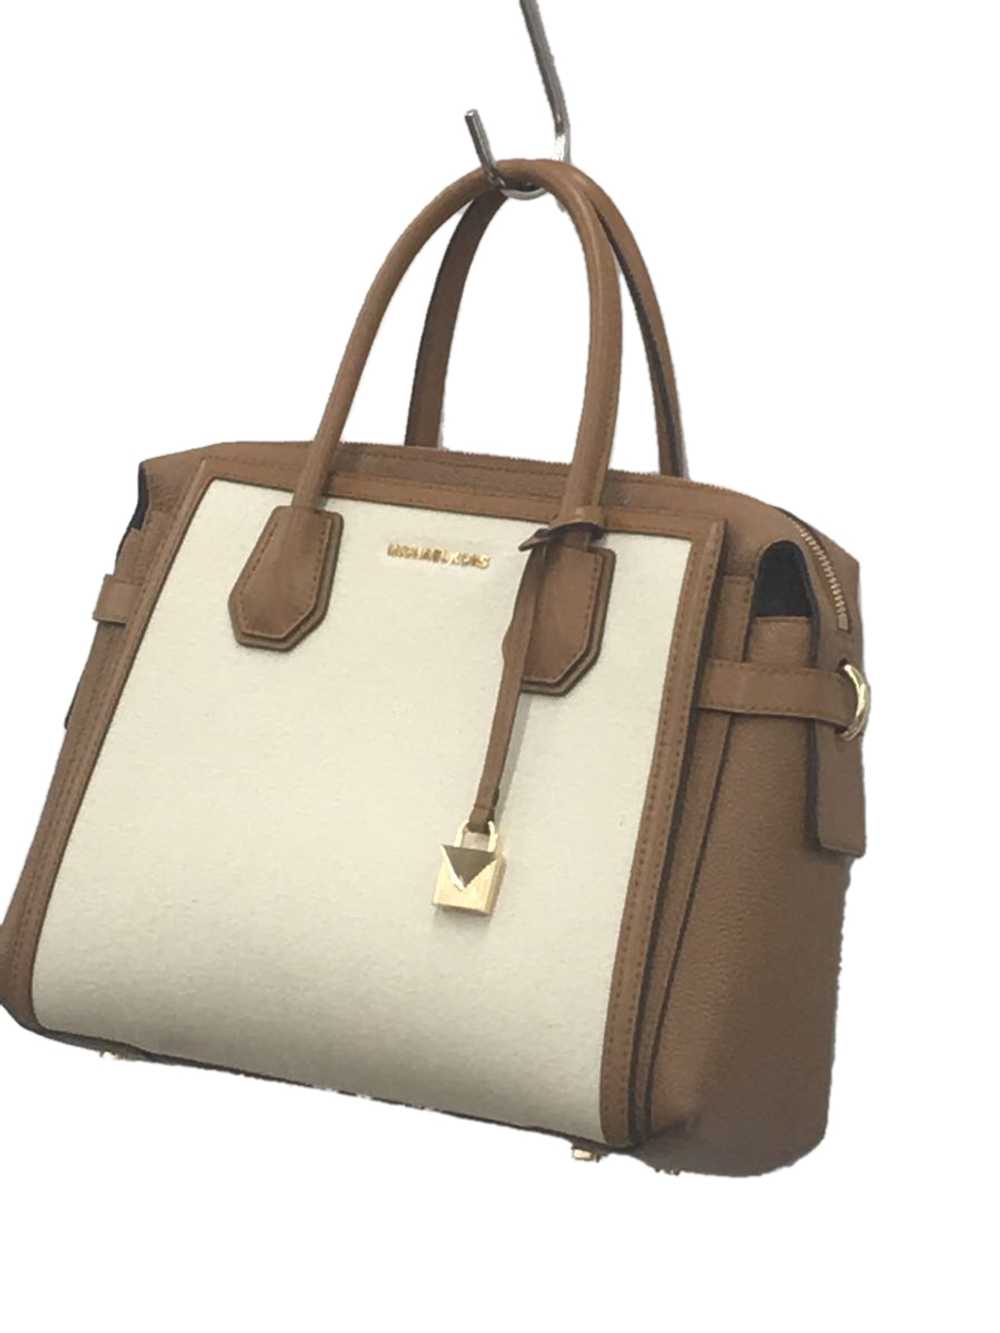 Michael Kors Handbag/Canvas/Brw/Plain Bag - image 2